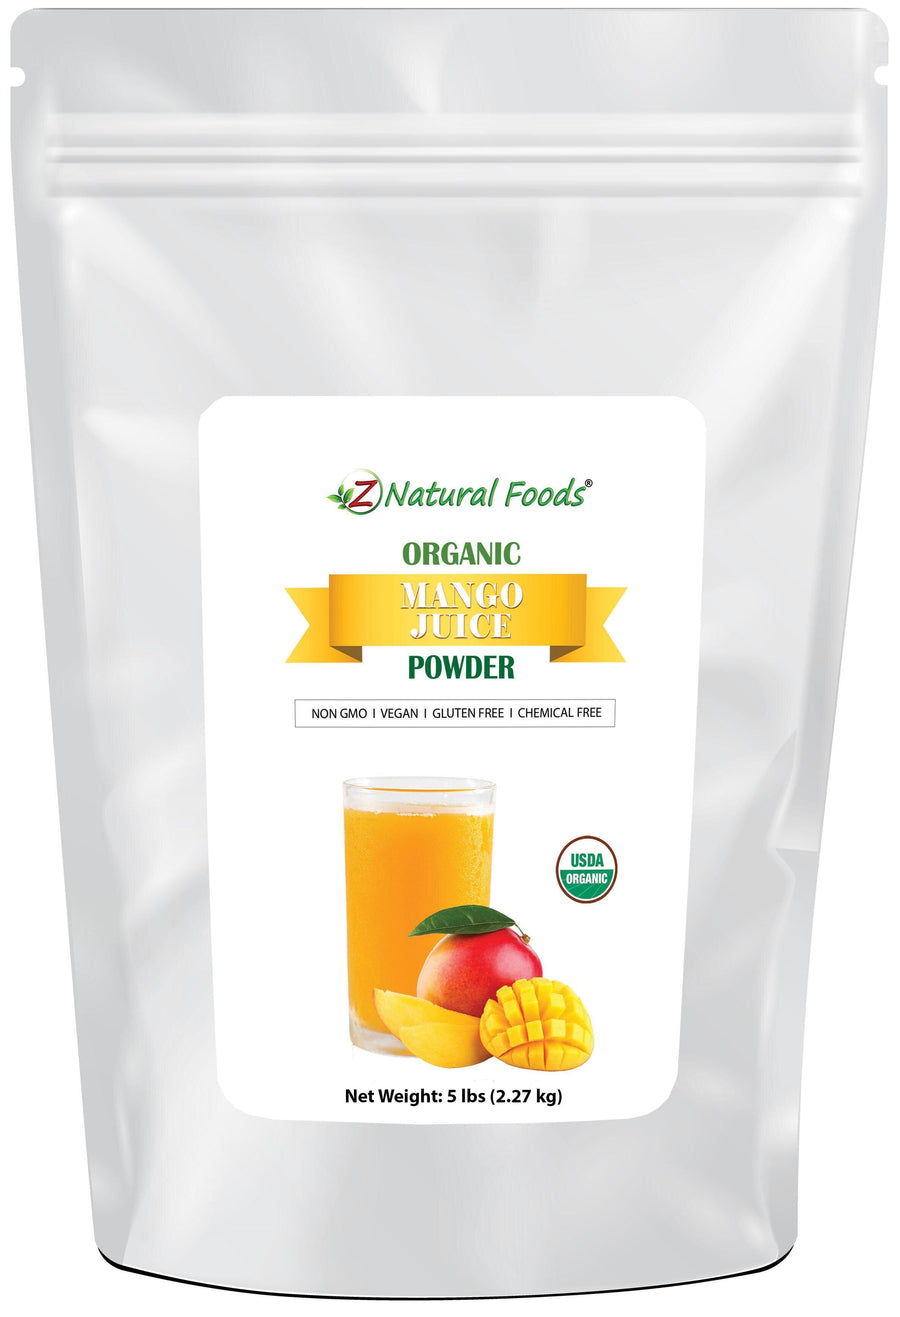 Photo of front of bag of 5 lb Mango Juice Powder - Organic Fruit Powders Z Natural Foods 